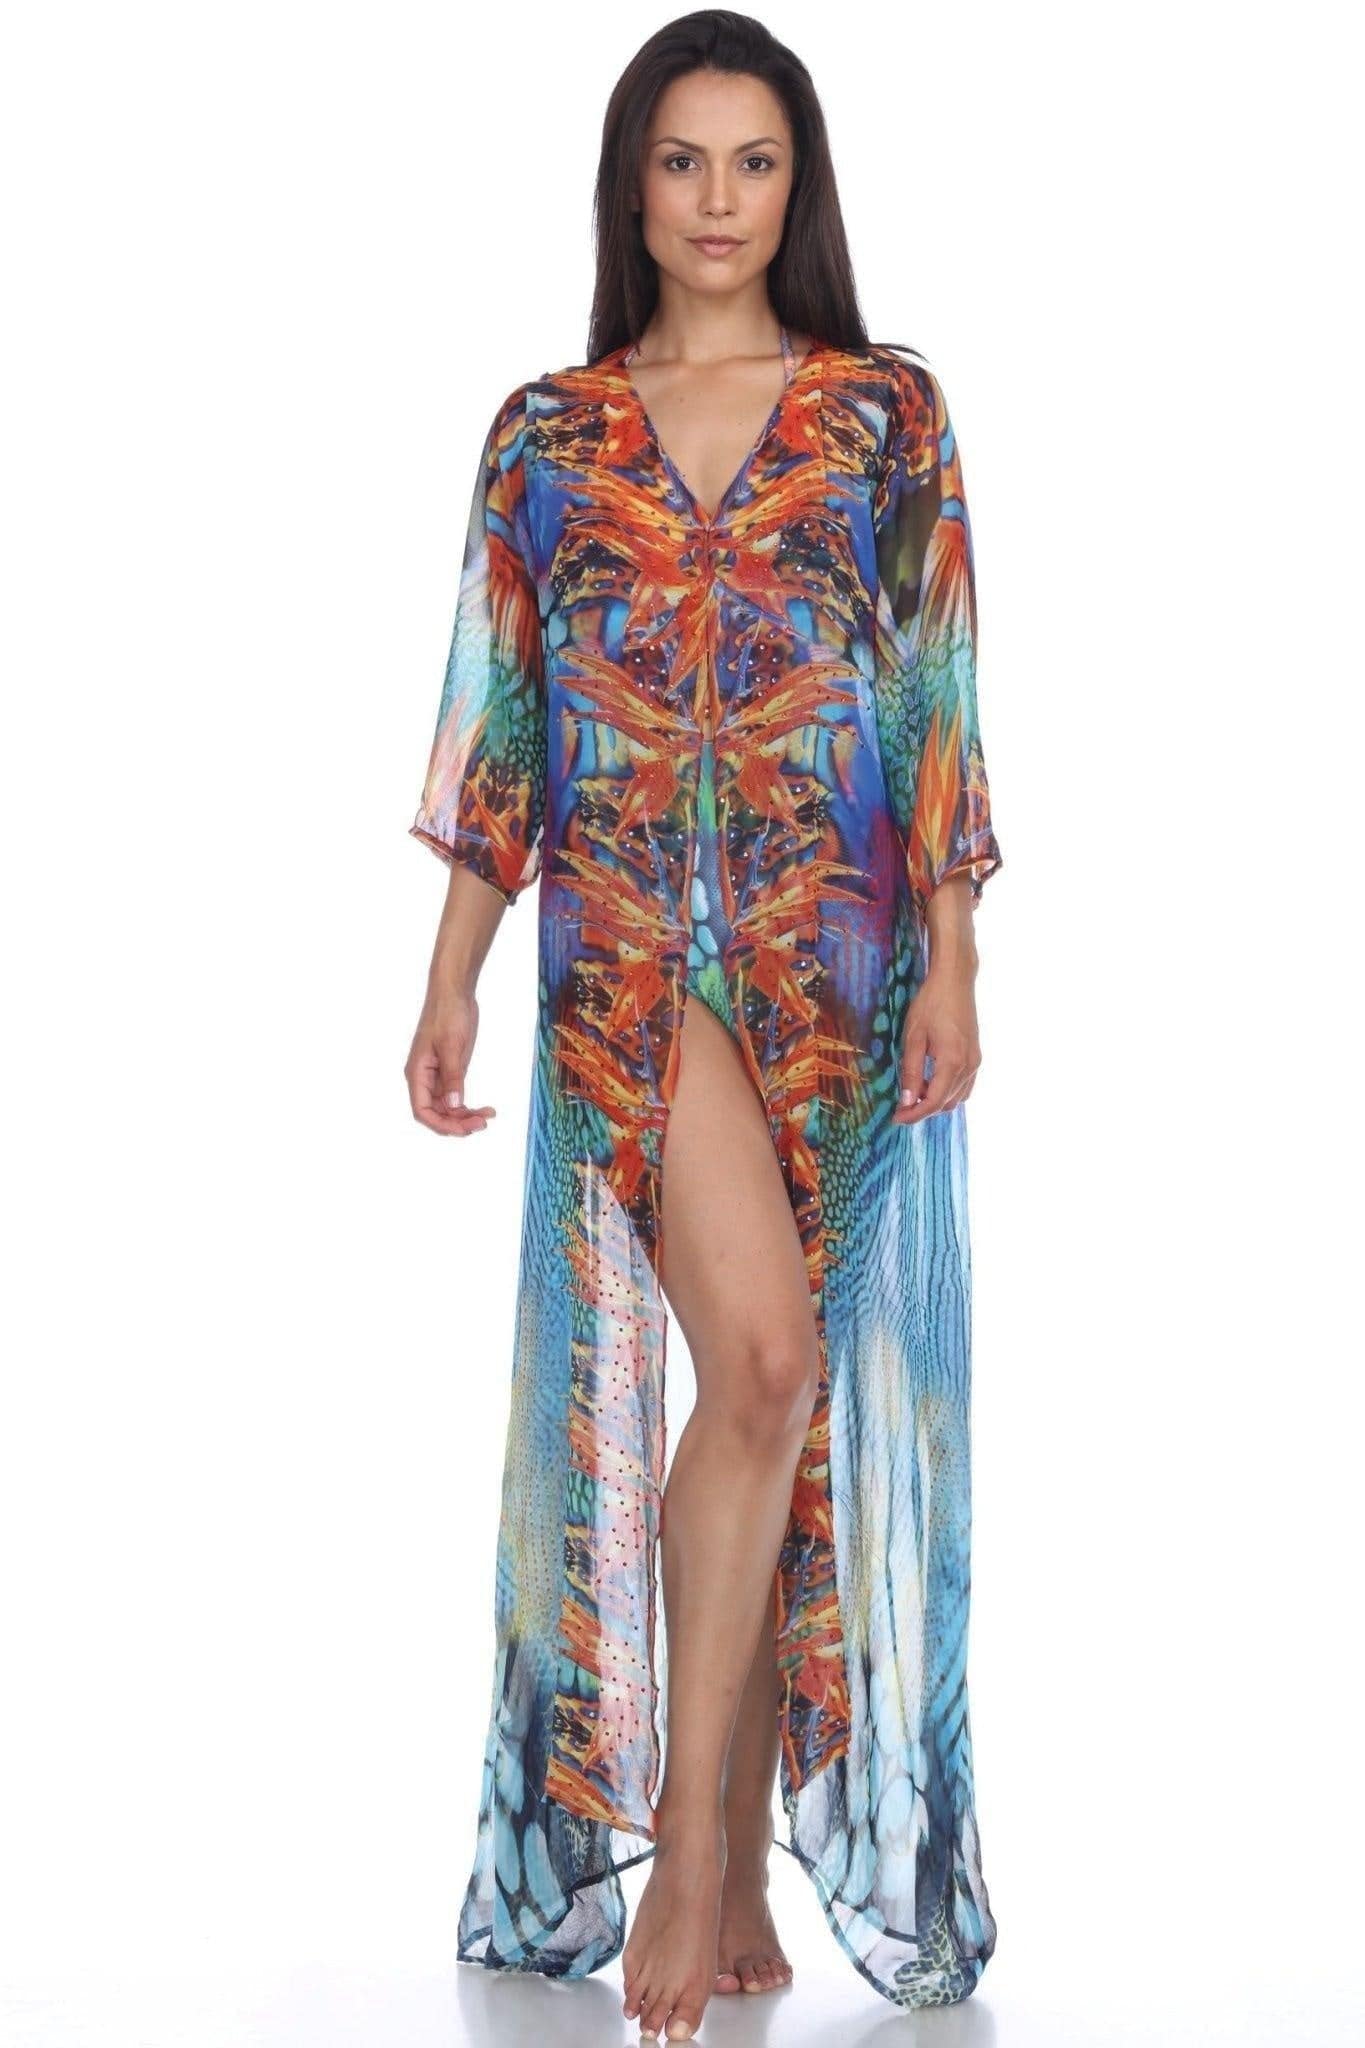 Kimono Cover Up  Shop Sexy Swimsuit Coverups, Beach, & Resort Wear